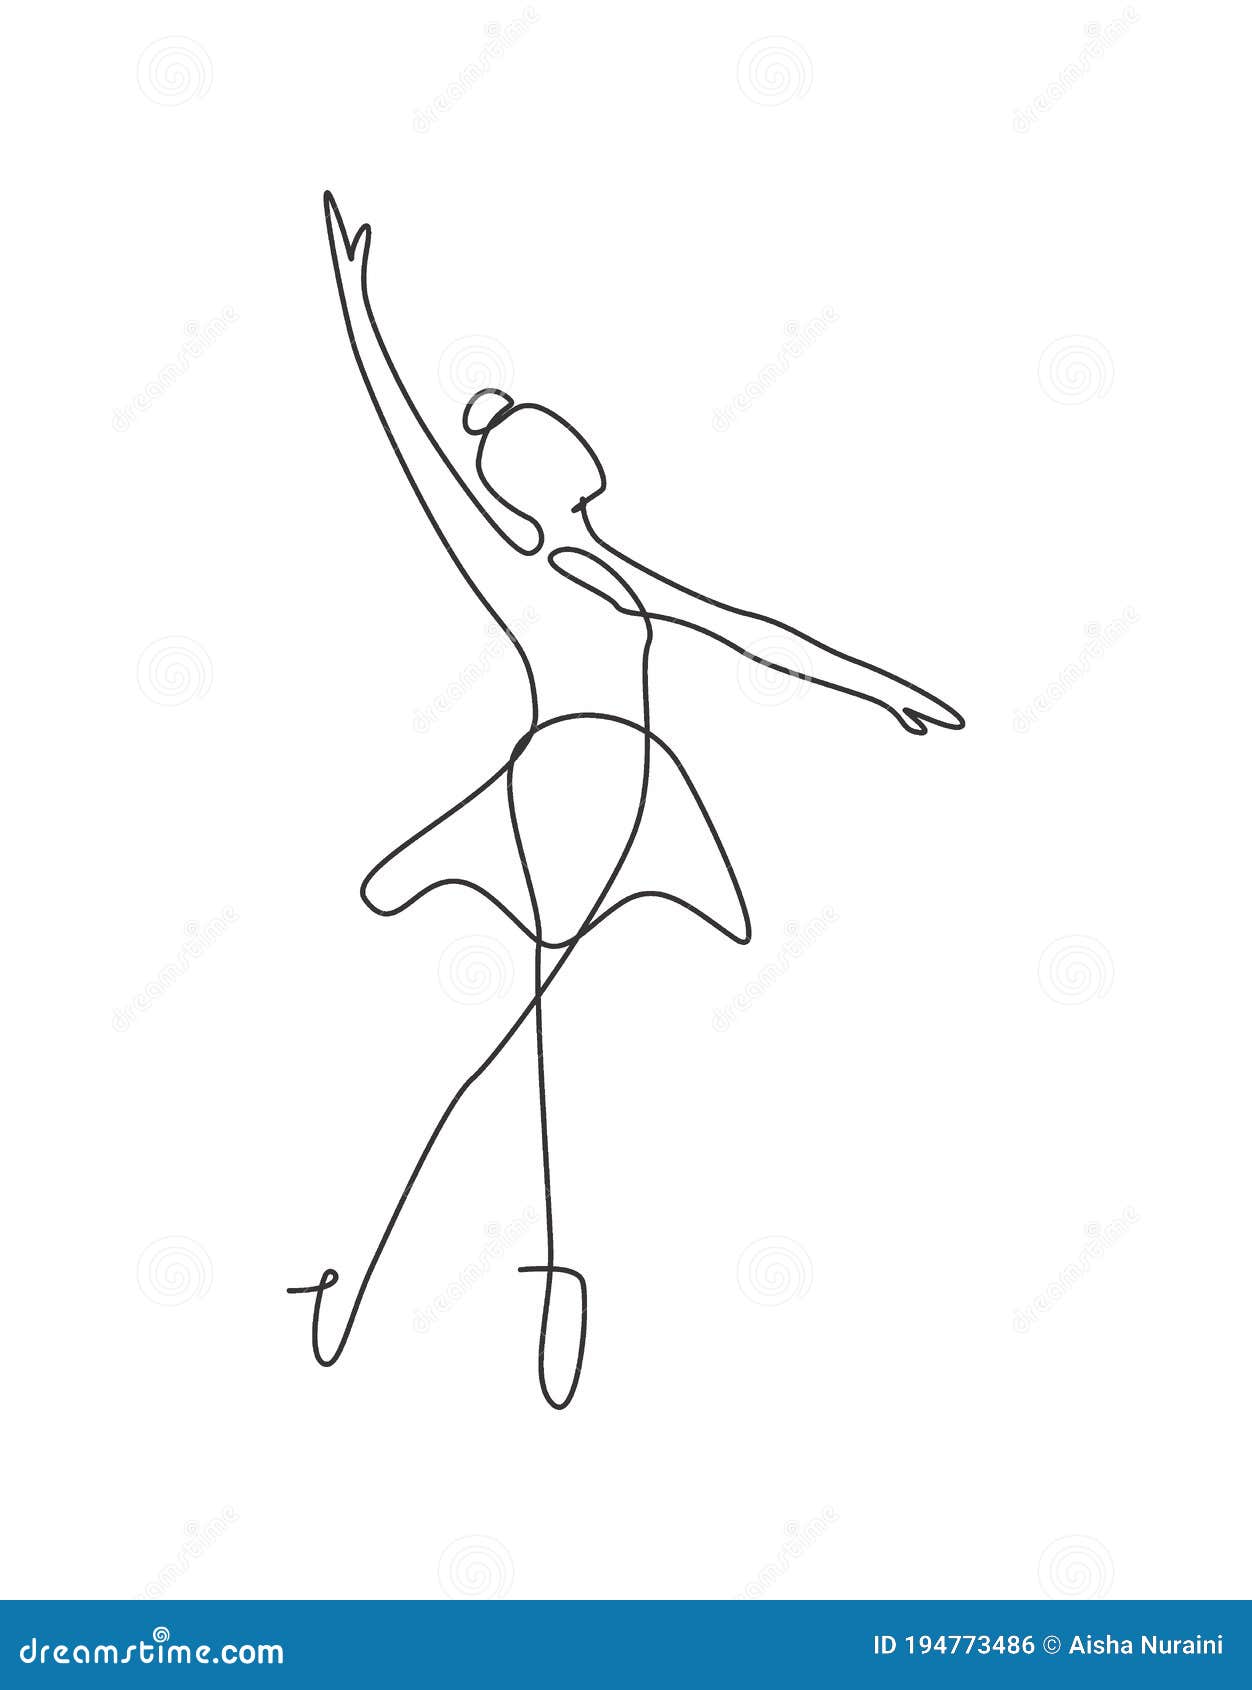 Single Continuous Line Drawing Ballerina in Ballet Motion Dance Style. Minimalist Dancer Concept Logo, Scandinavian Poster Stock Illustration - Illustration of dress: 194773486